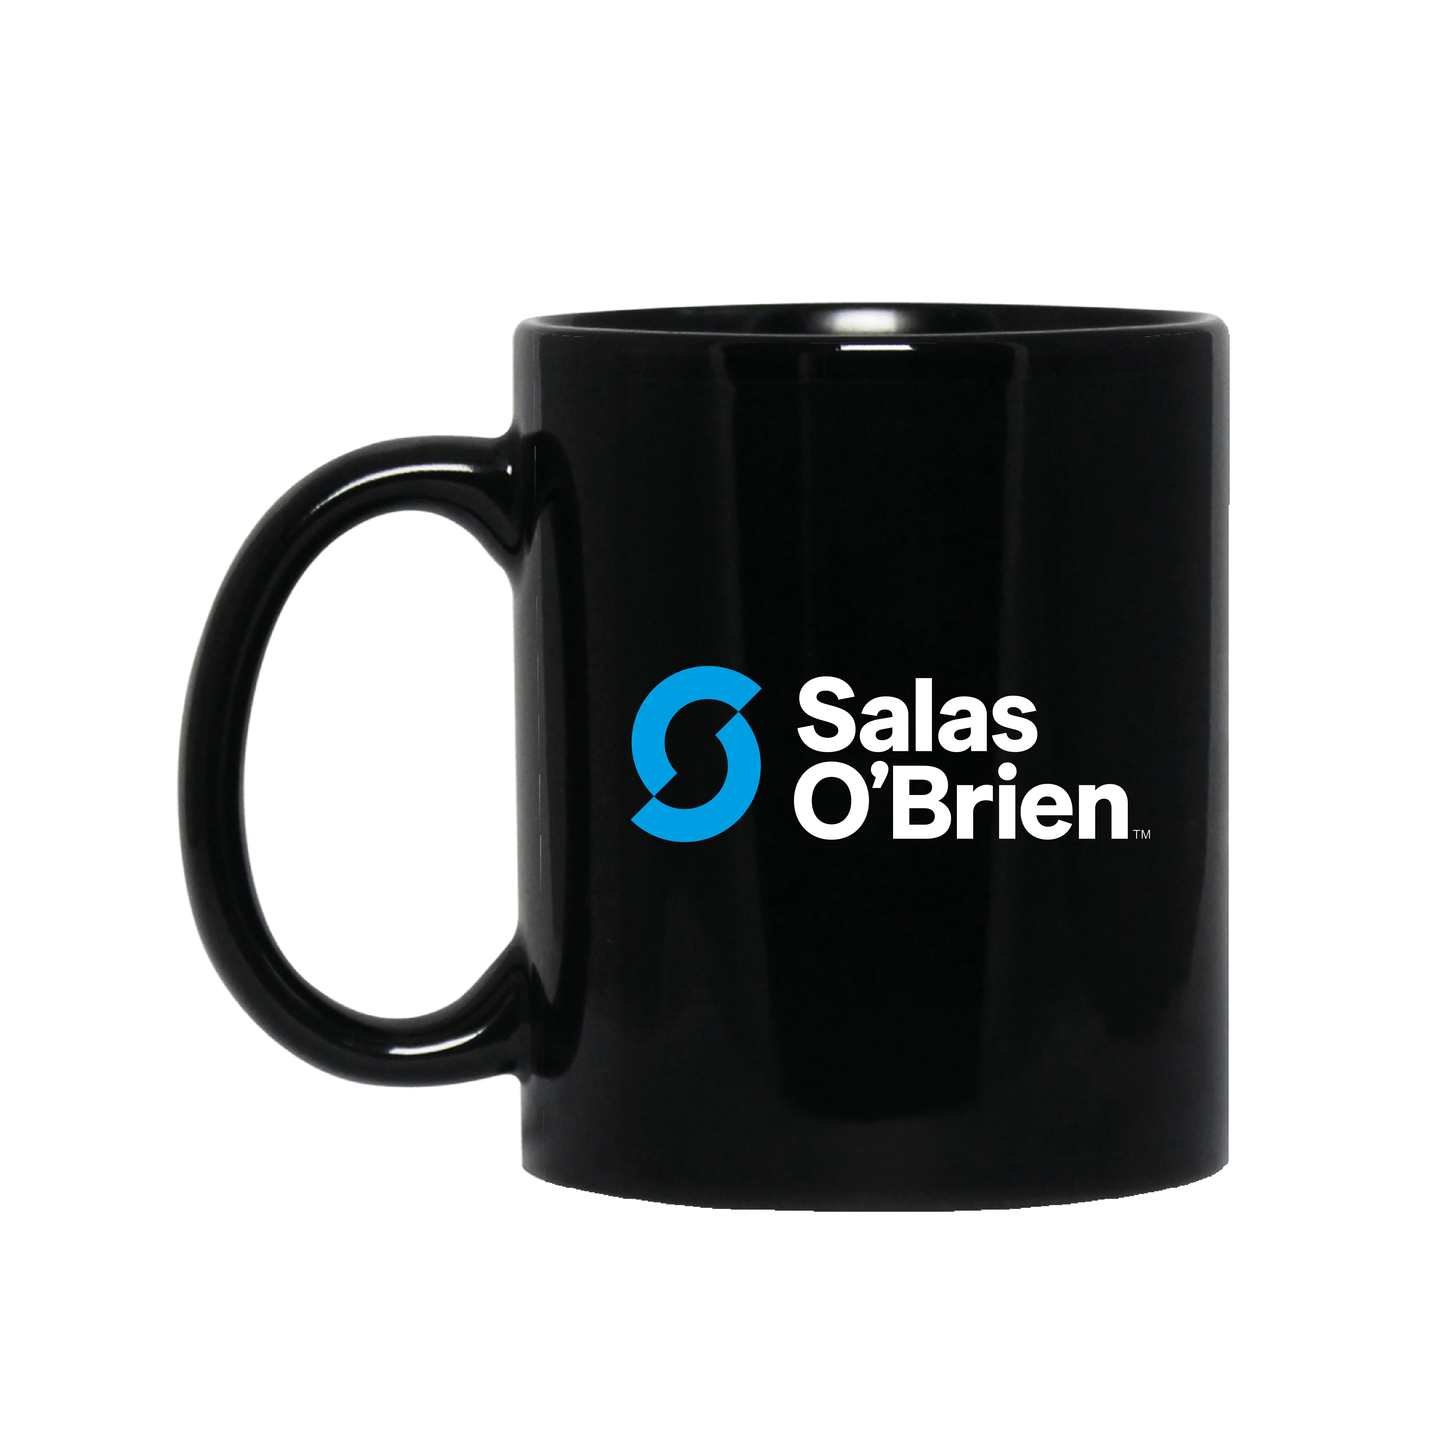 Salas O'Brien Ceramic Mug/Bulk orders 48 units